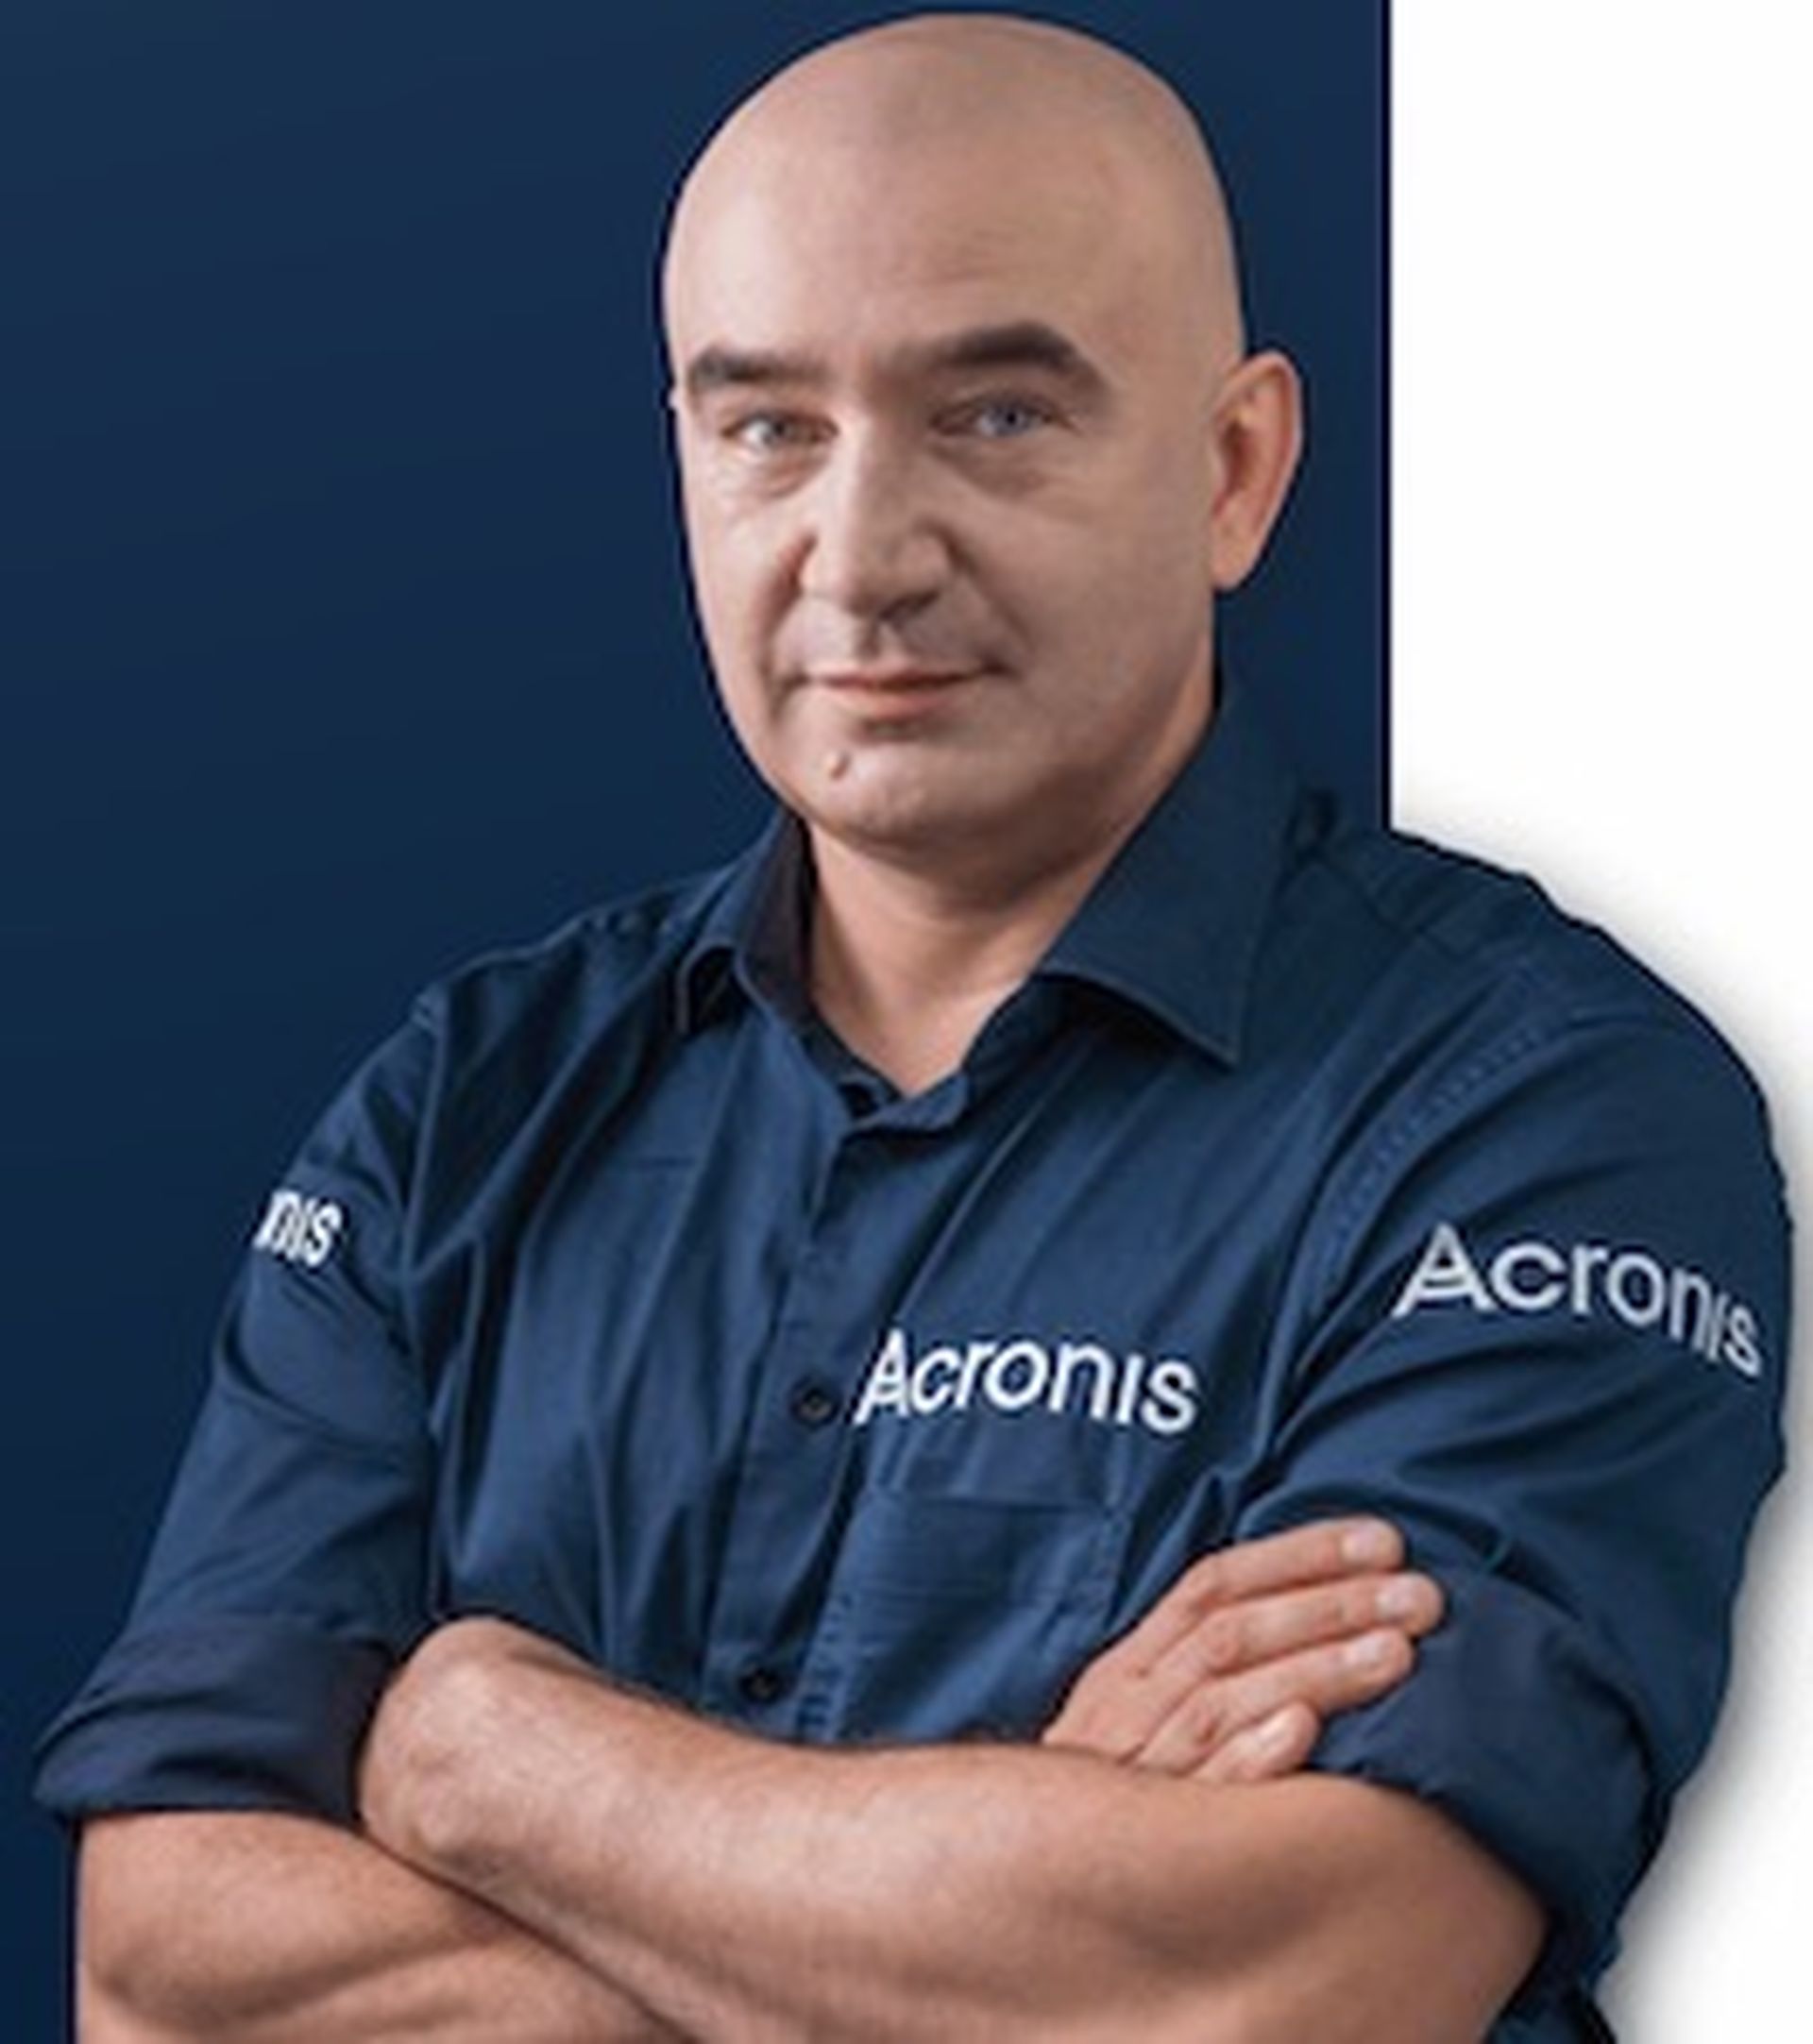 Serguei Beloussov, CEO, Acronis